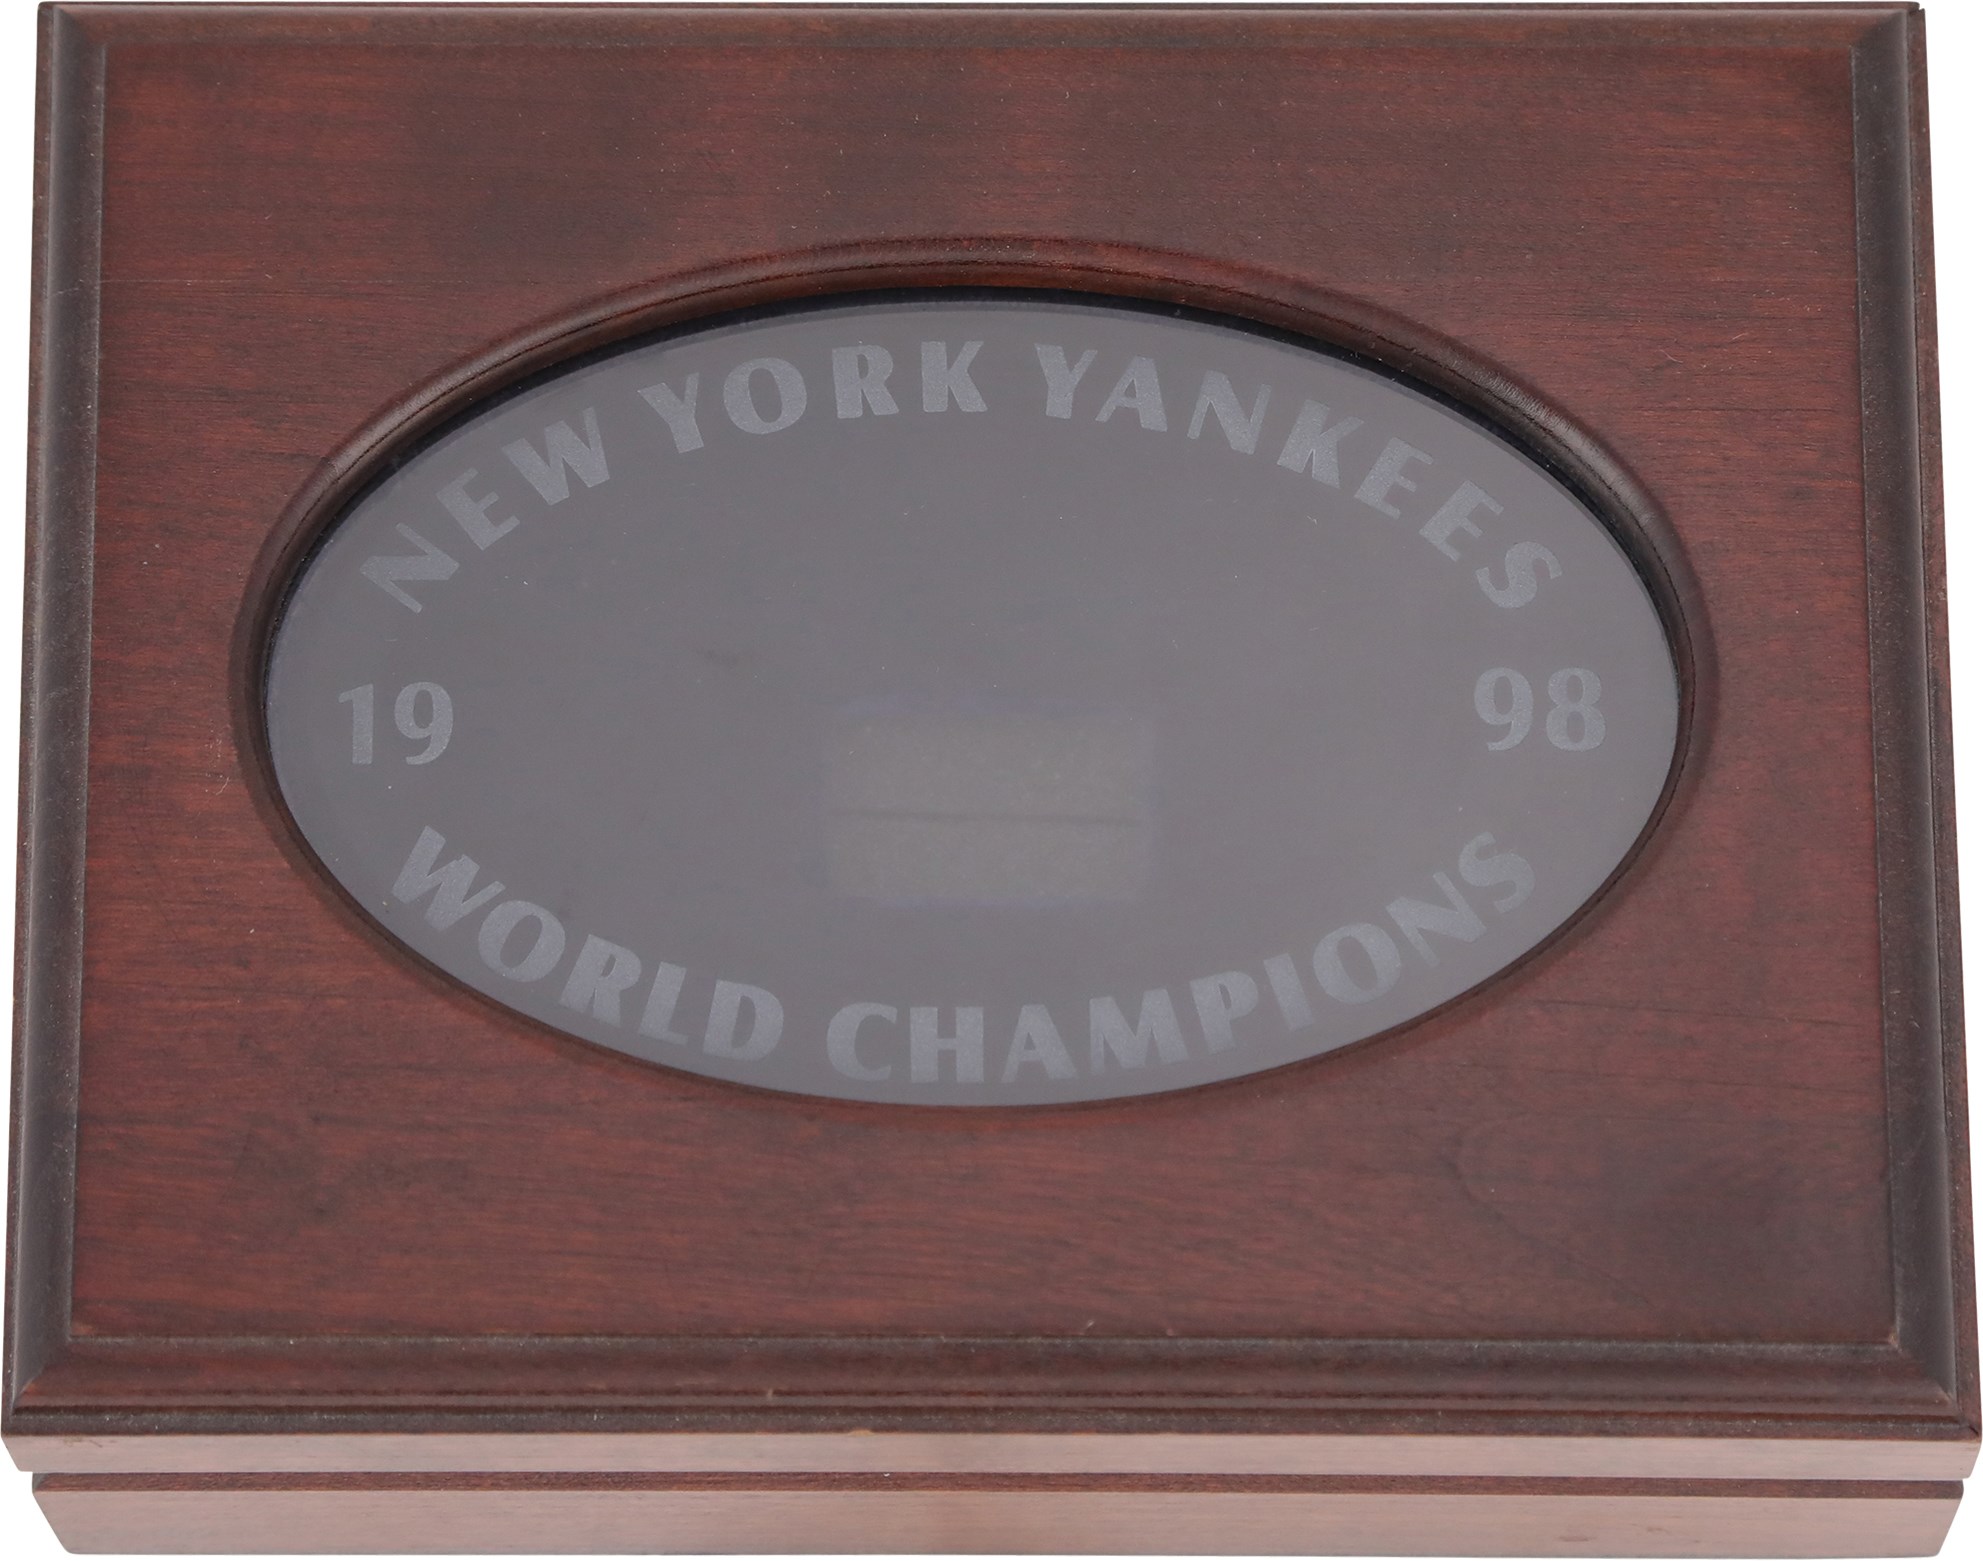 - 1998 New York Yankees World Championship Ring Display Box